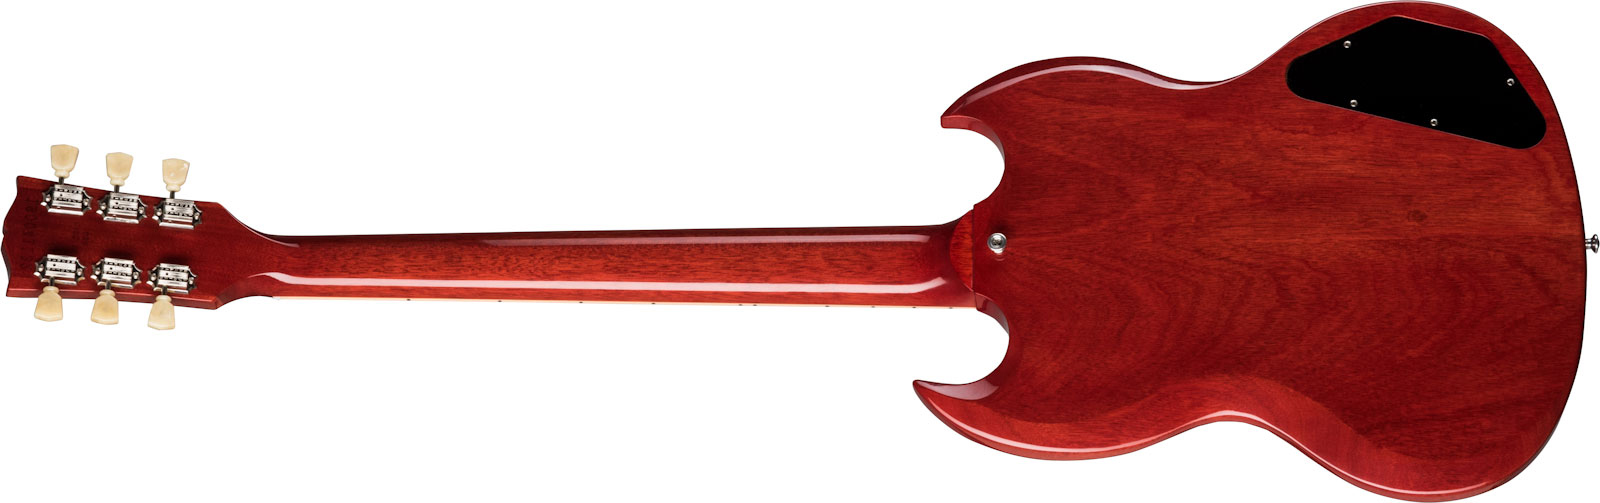 Gibson Sg Standard '61 Lh Gaucher 2h Ht Rw - Vintage Cherry - Left-handed electric guitar - Variation 1